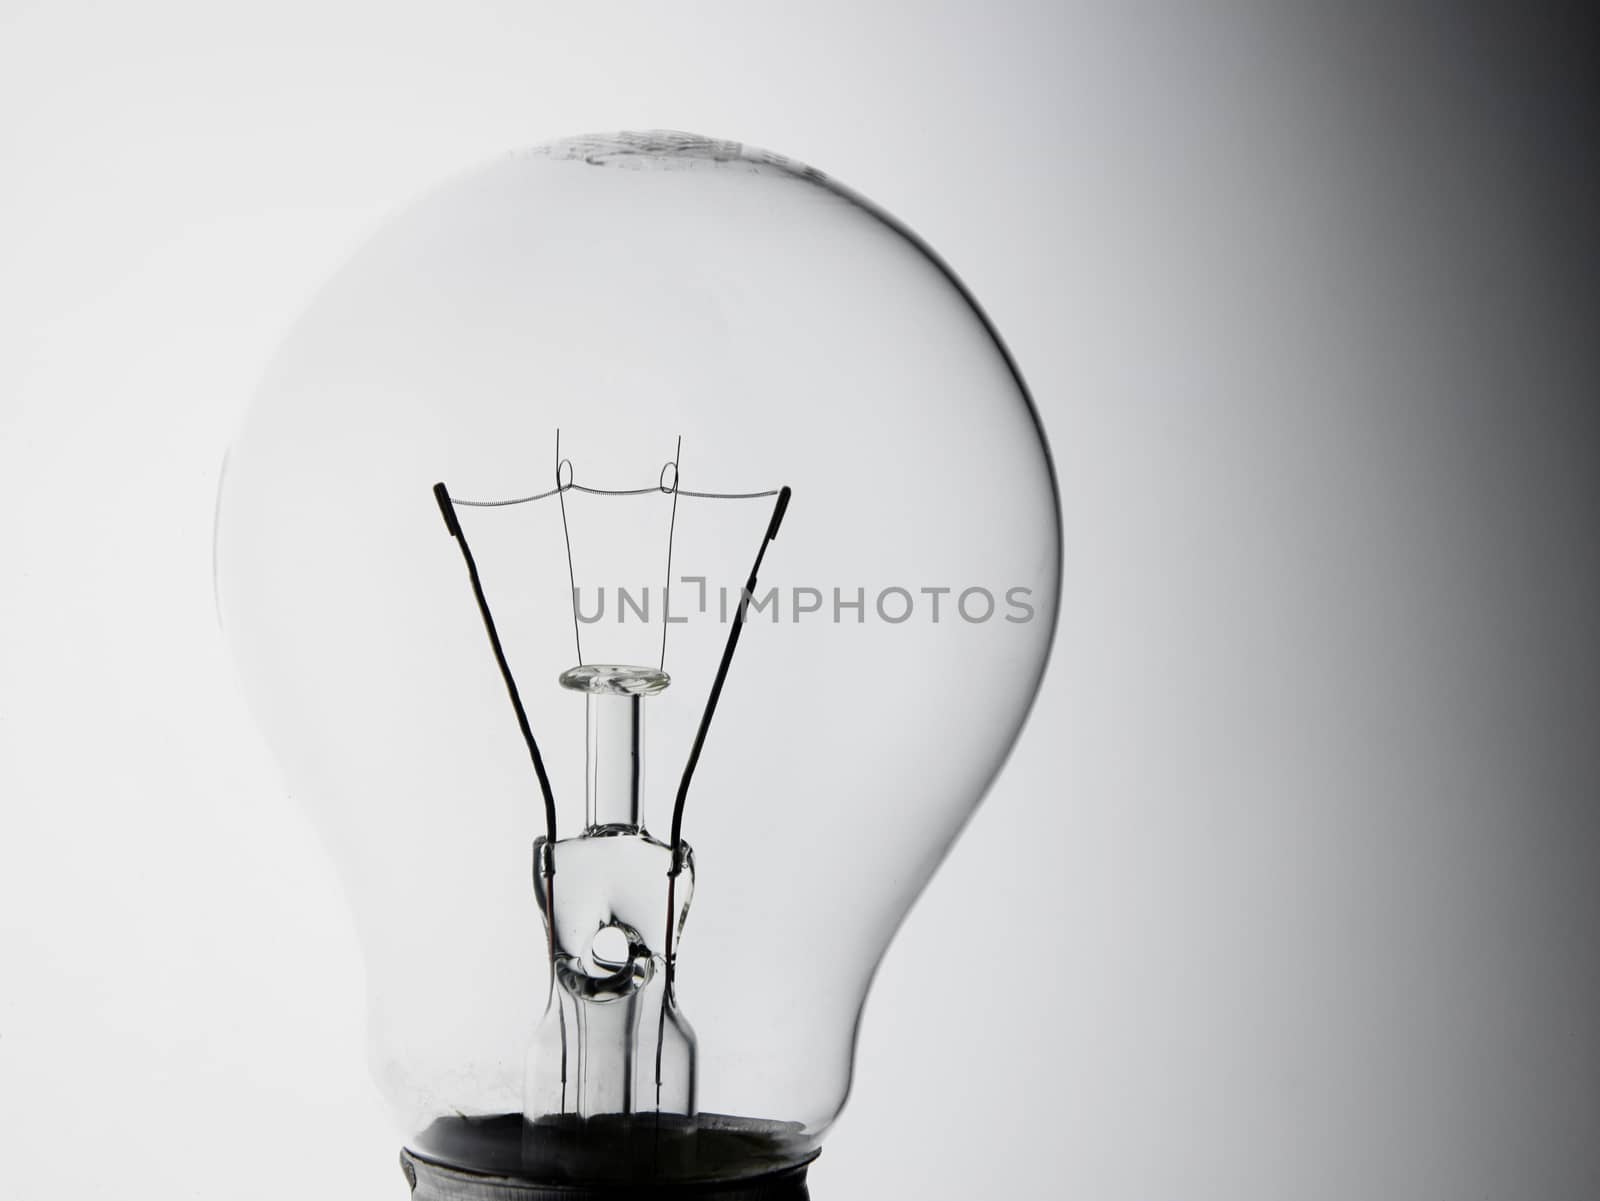 light bulb on the white background